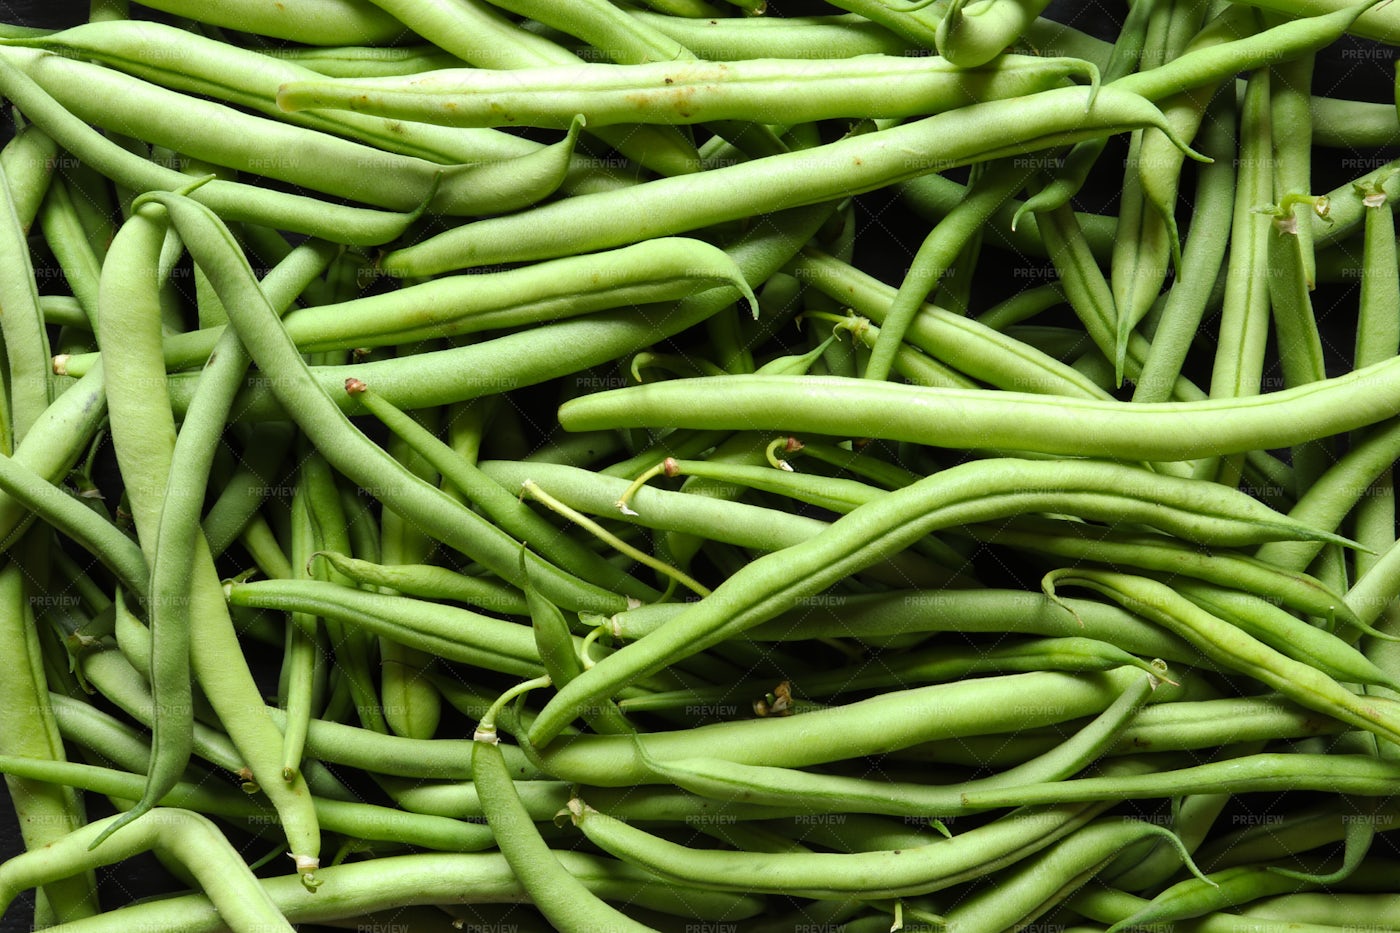 Green Beans Background: Stock Photos